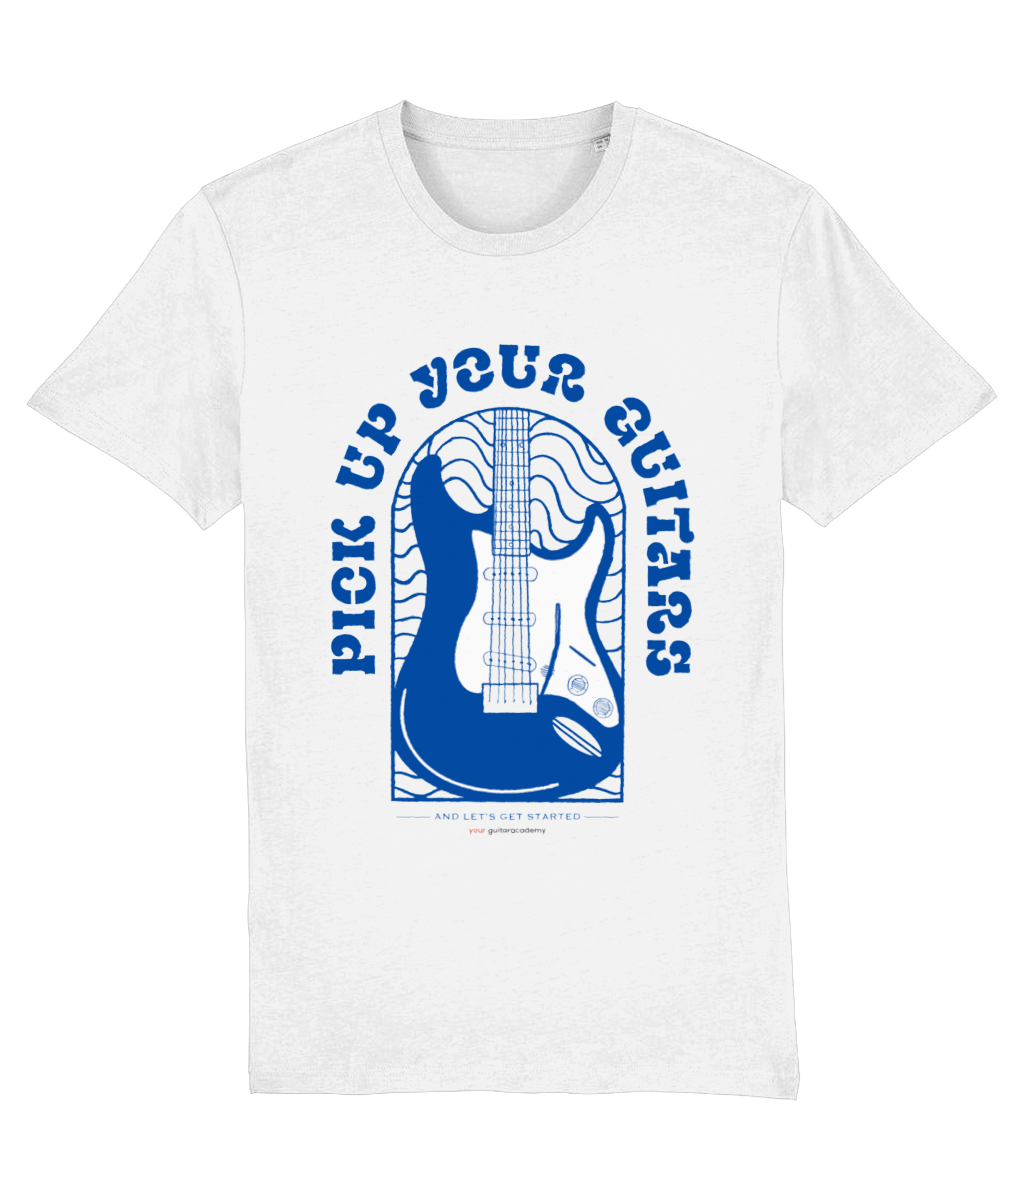 Pick Up Your Guitars Blue T-Shirt